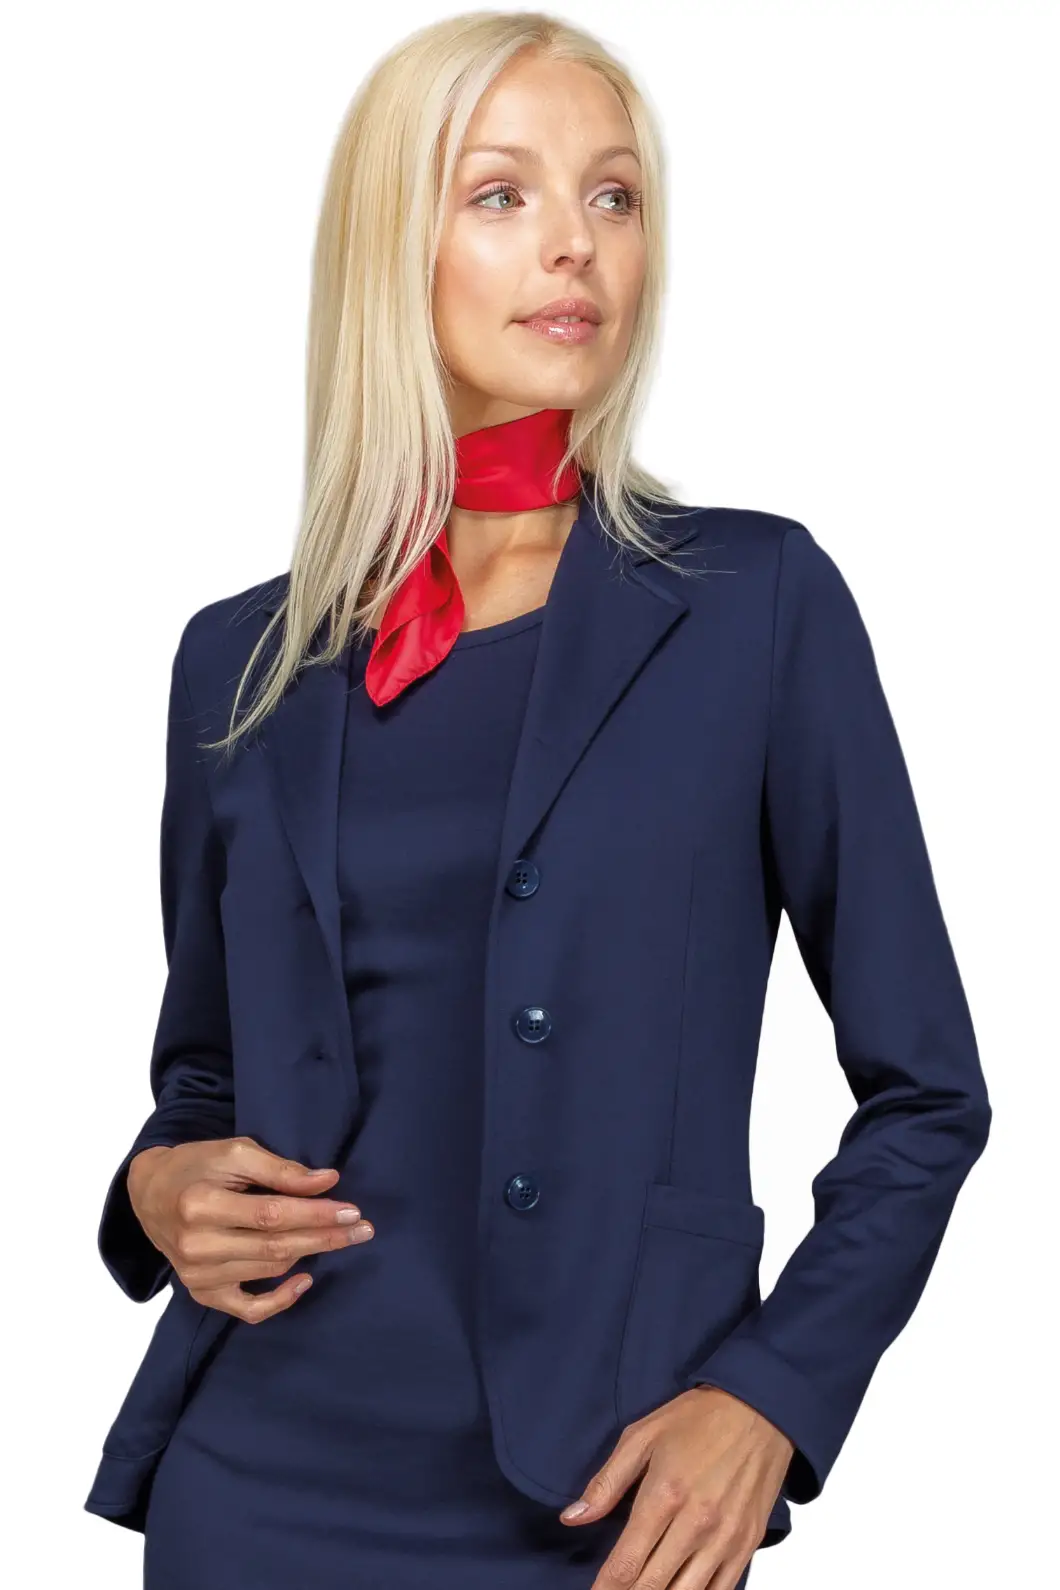 Giacca Donna Jersey Blu per Promoter, Hostes, Cameriere Personalizzata - Isacco